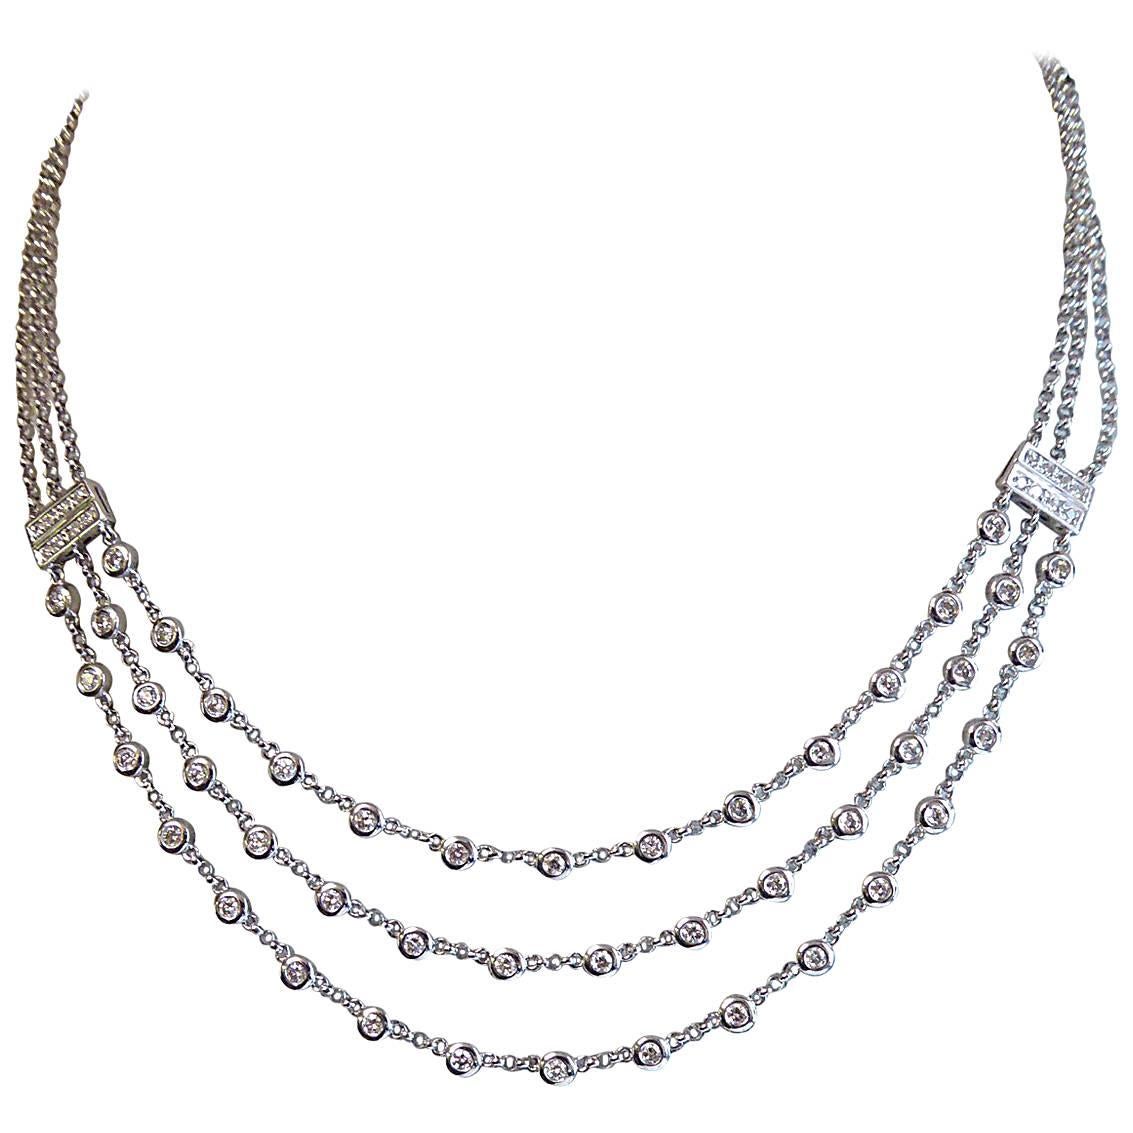 1.69 Carat Contemporary Diamond Necklace, 18 Carat White Gold, Hallmarked 2002